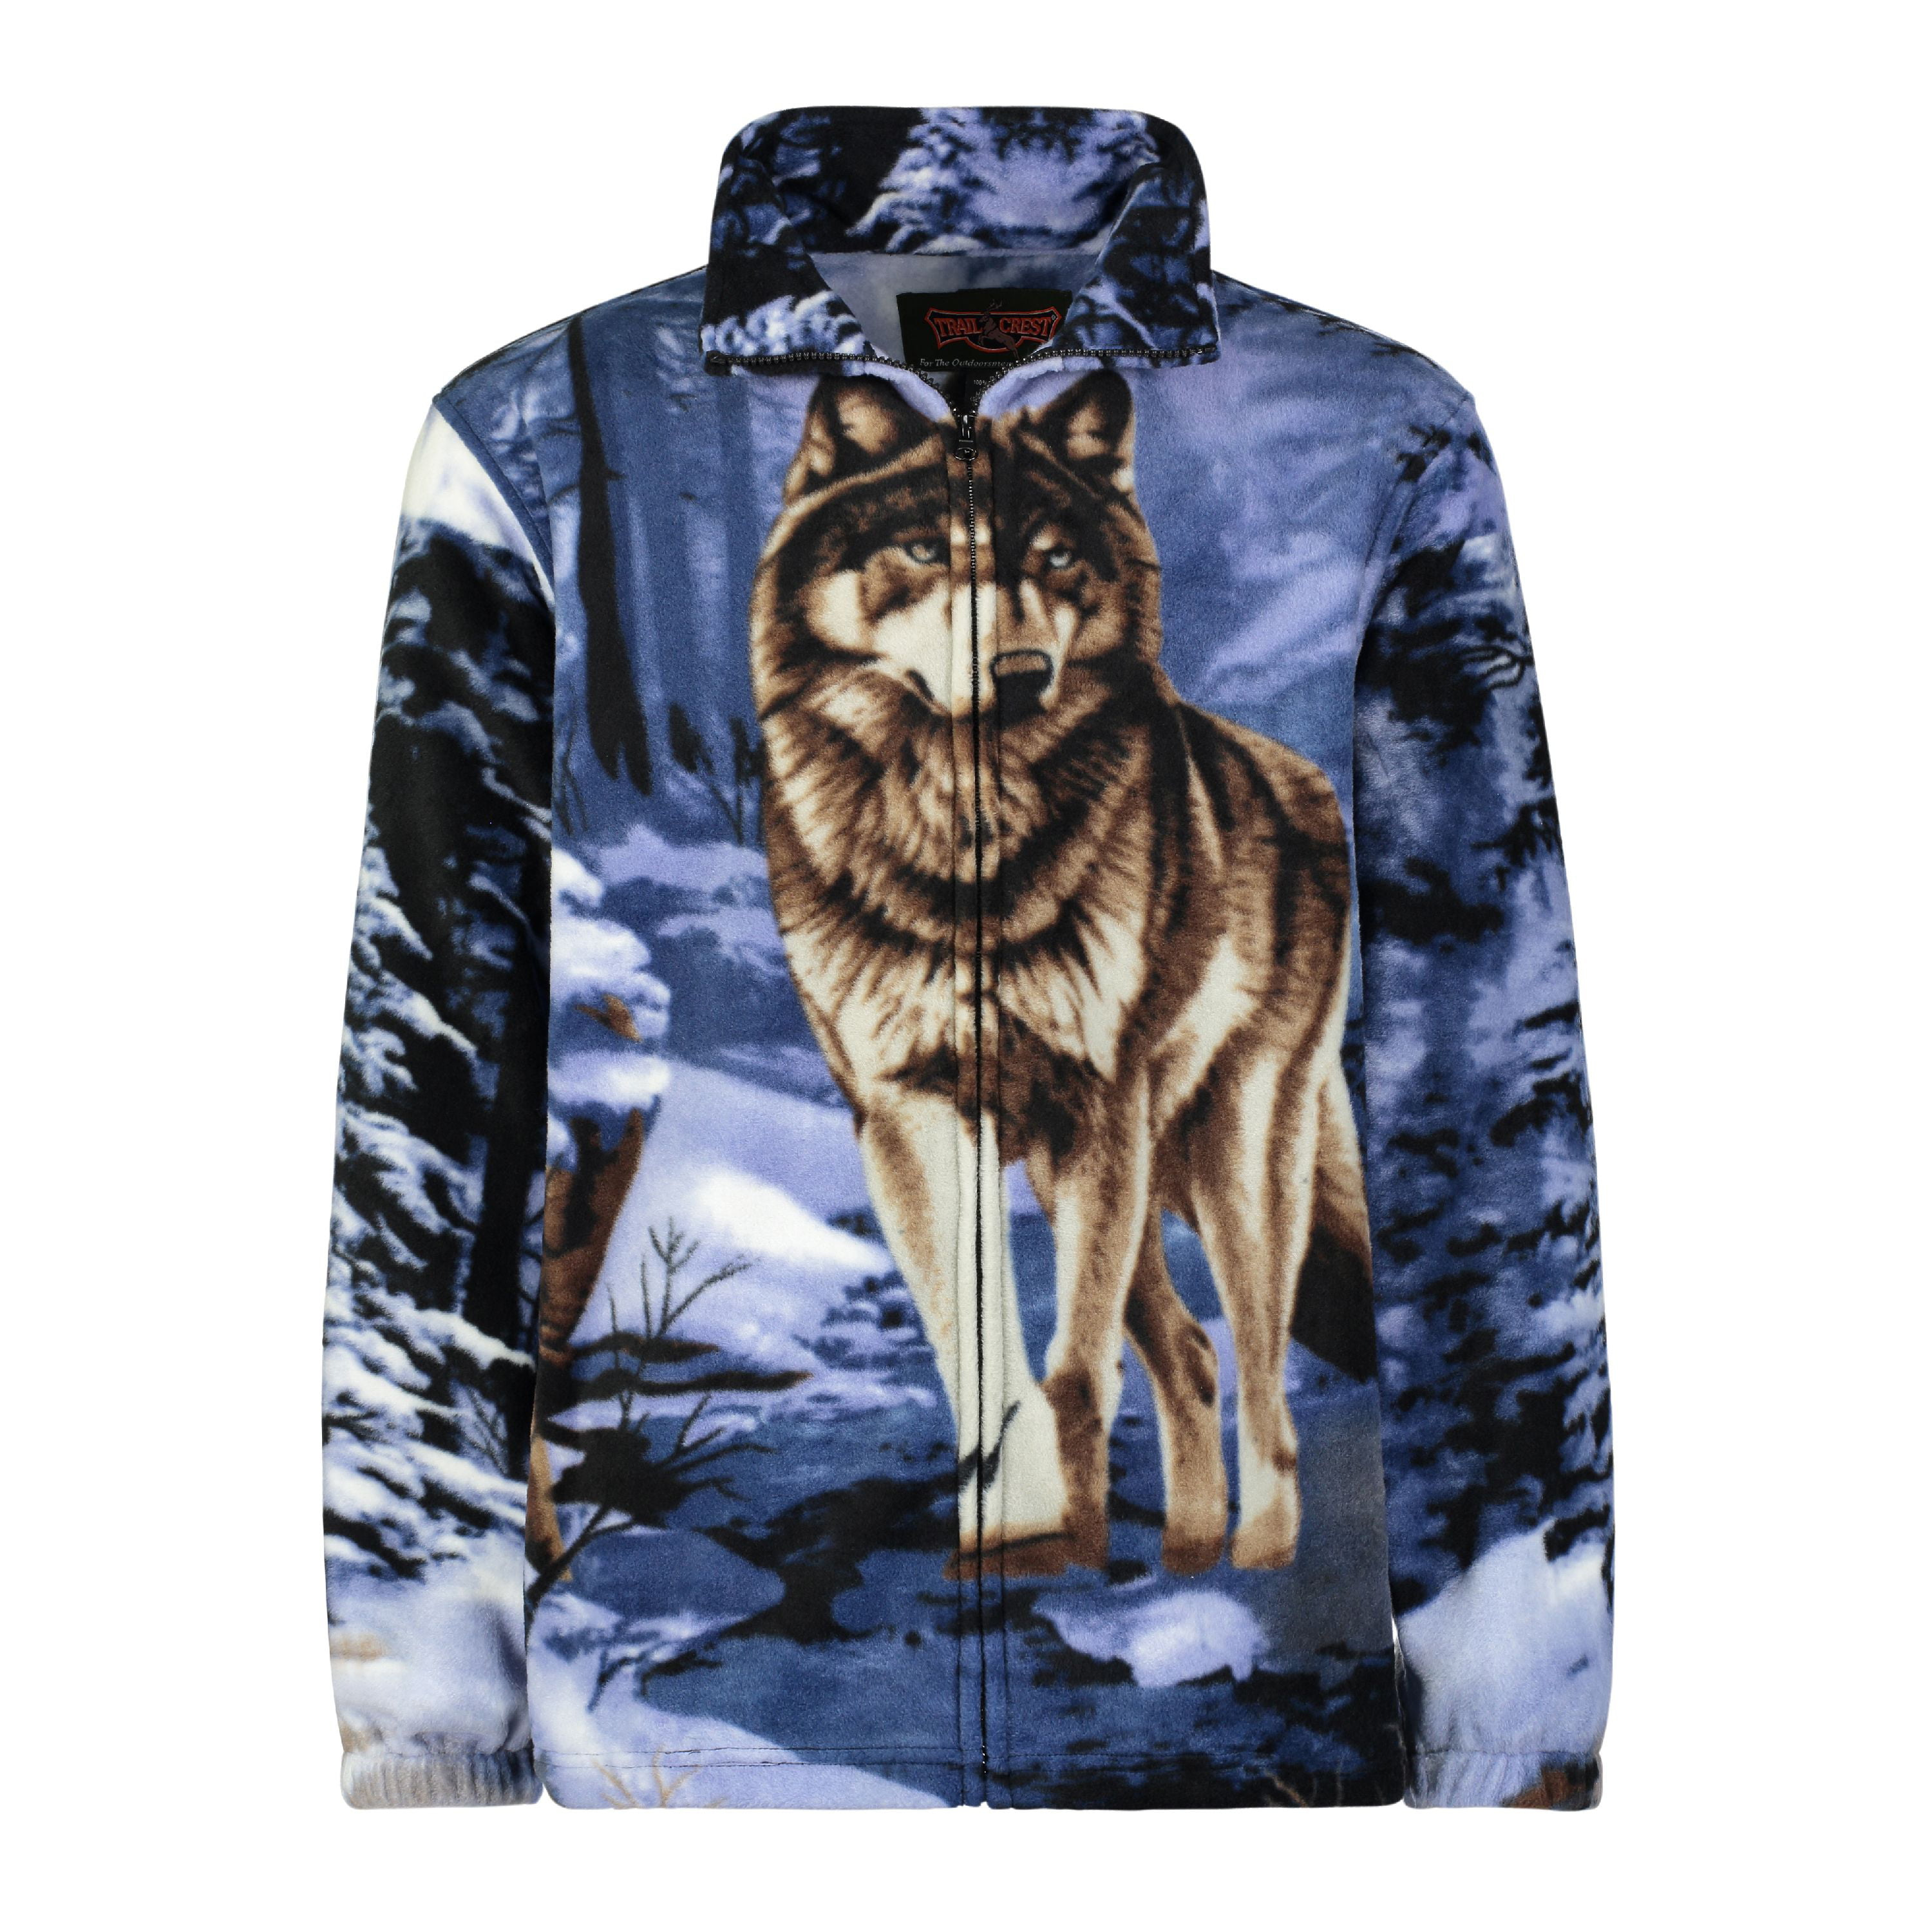 Mens Full-Zip Hoodie Sweatshirt Snow Wolf Sportswear Jackets with Pockets